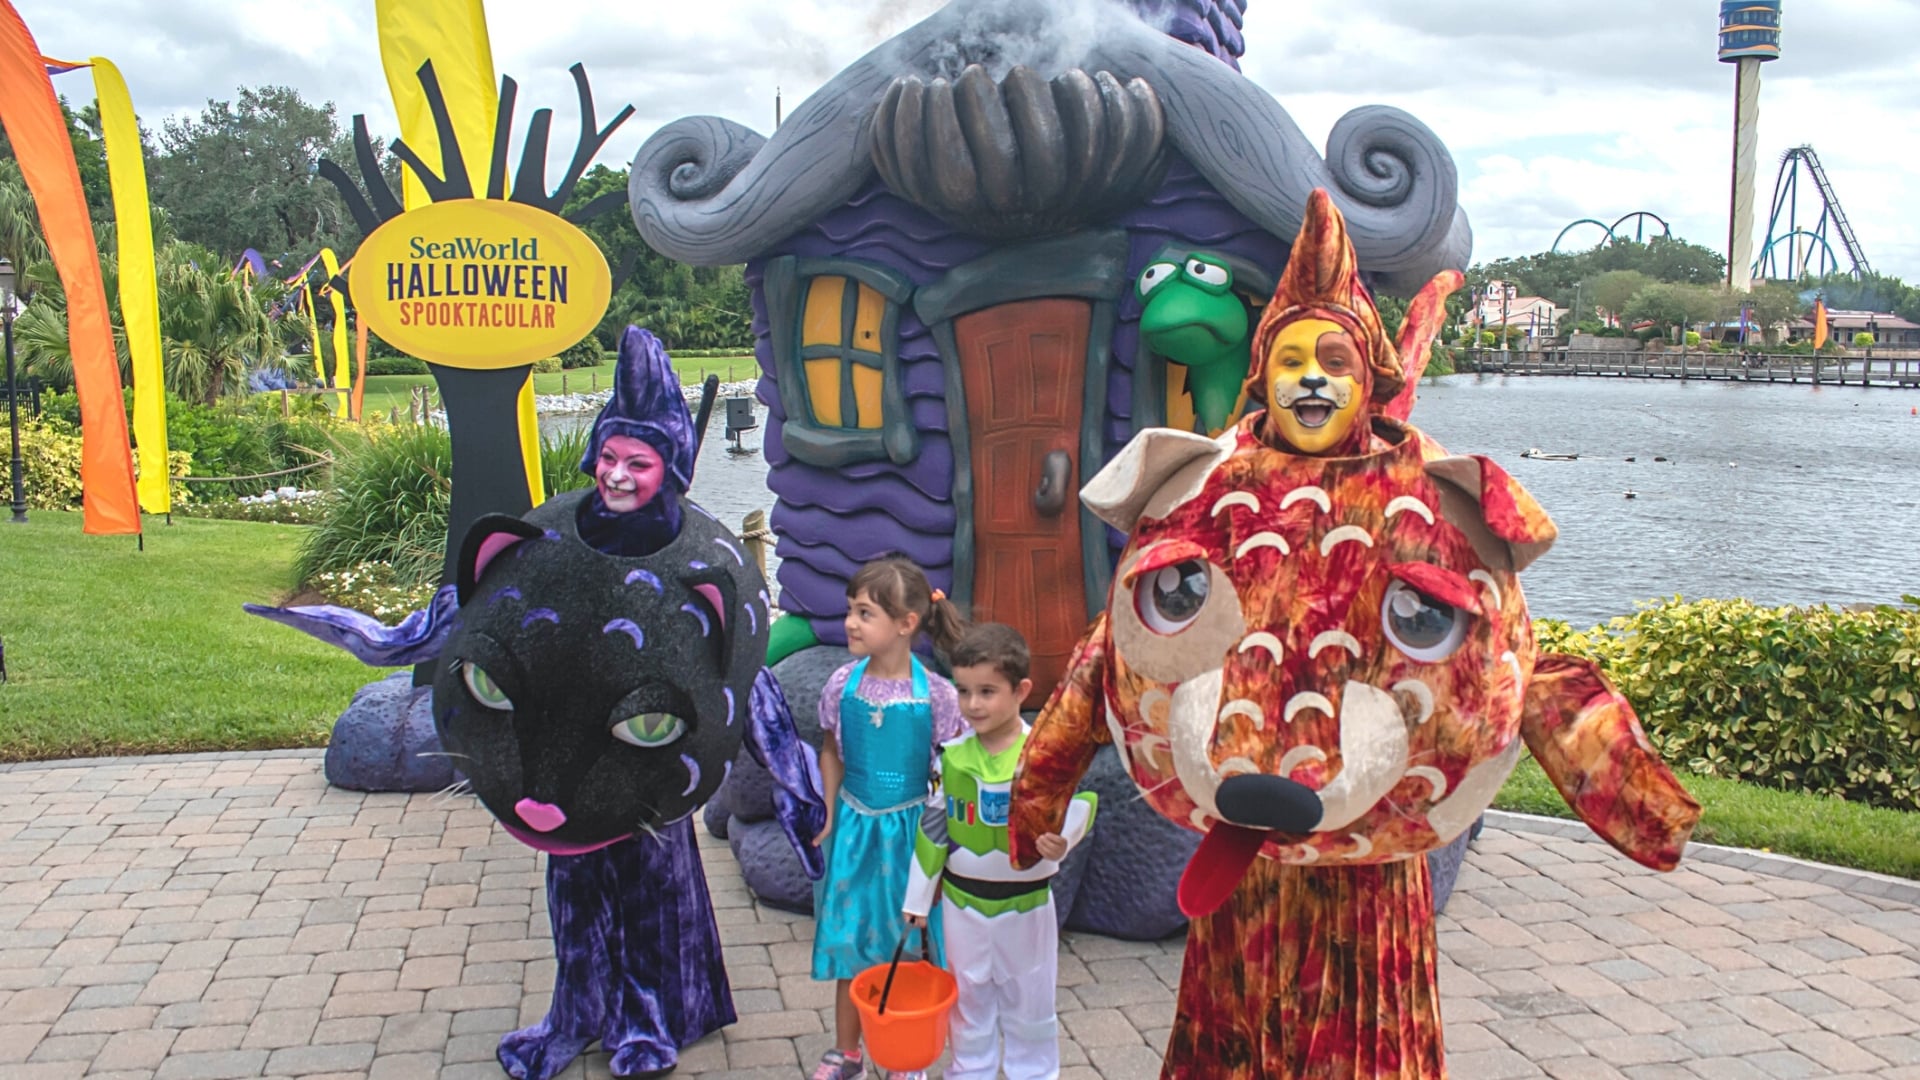 October Events in Orlando - SeaWorld Halloween Spooktacular